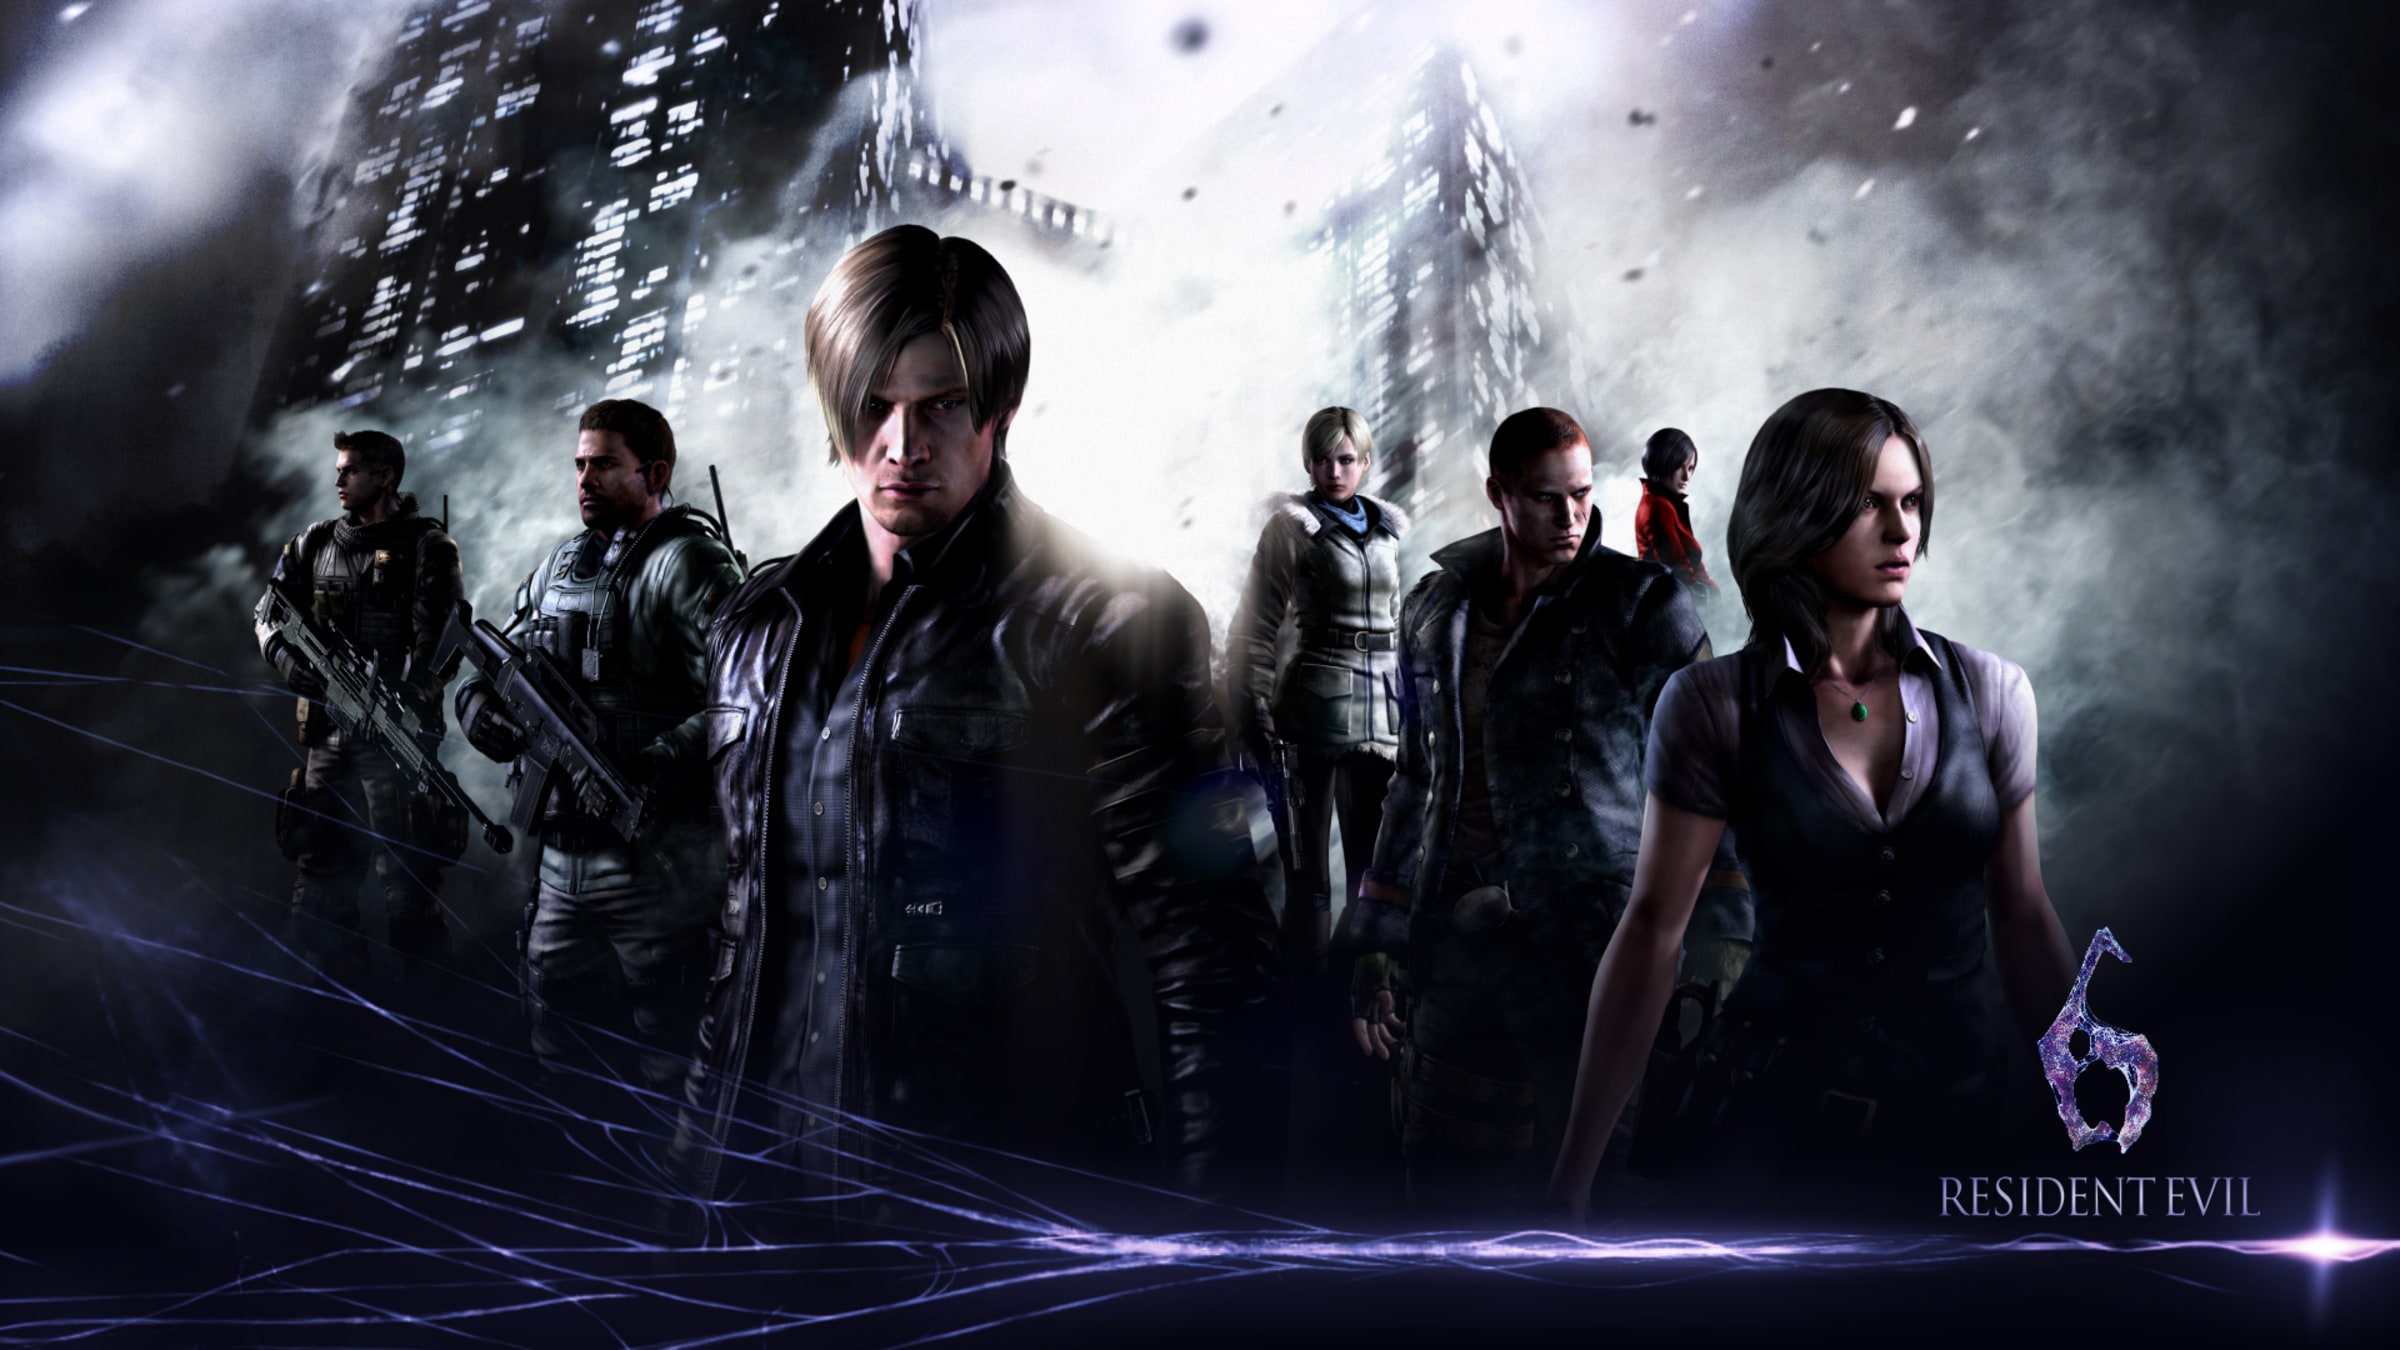 Resident Evil 6 for Nintendo Switch - Nintendo Official Site